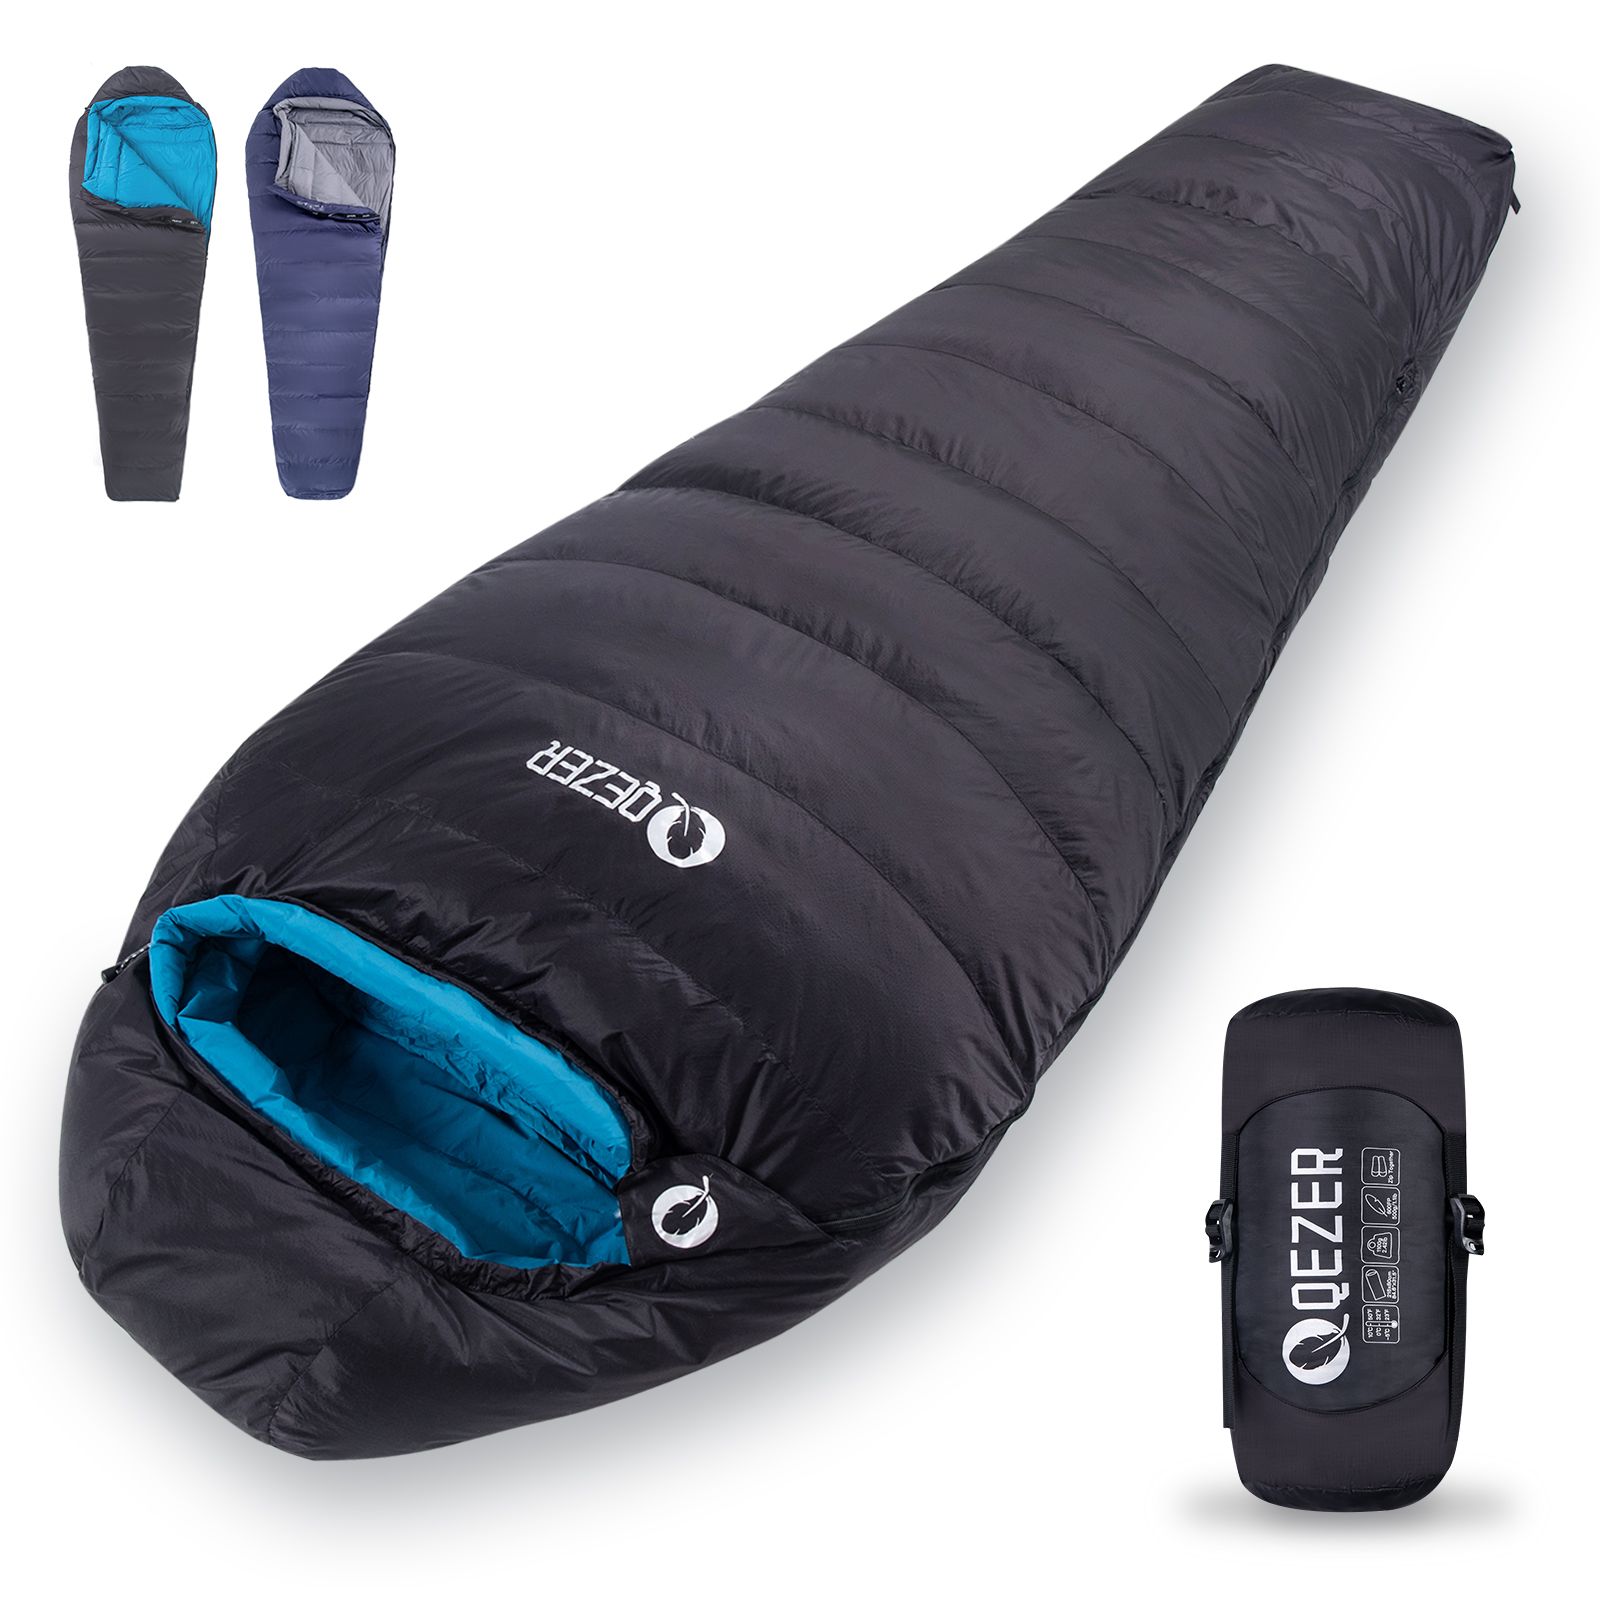 Qezer羽绒睡袋10°F 32°，用于露营、背包旅行